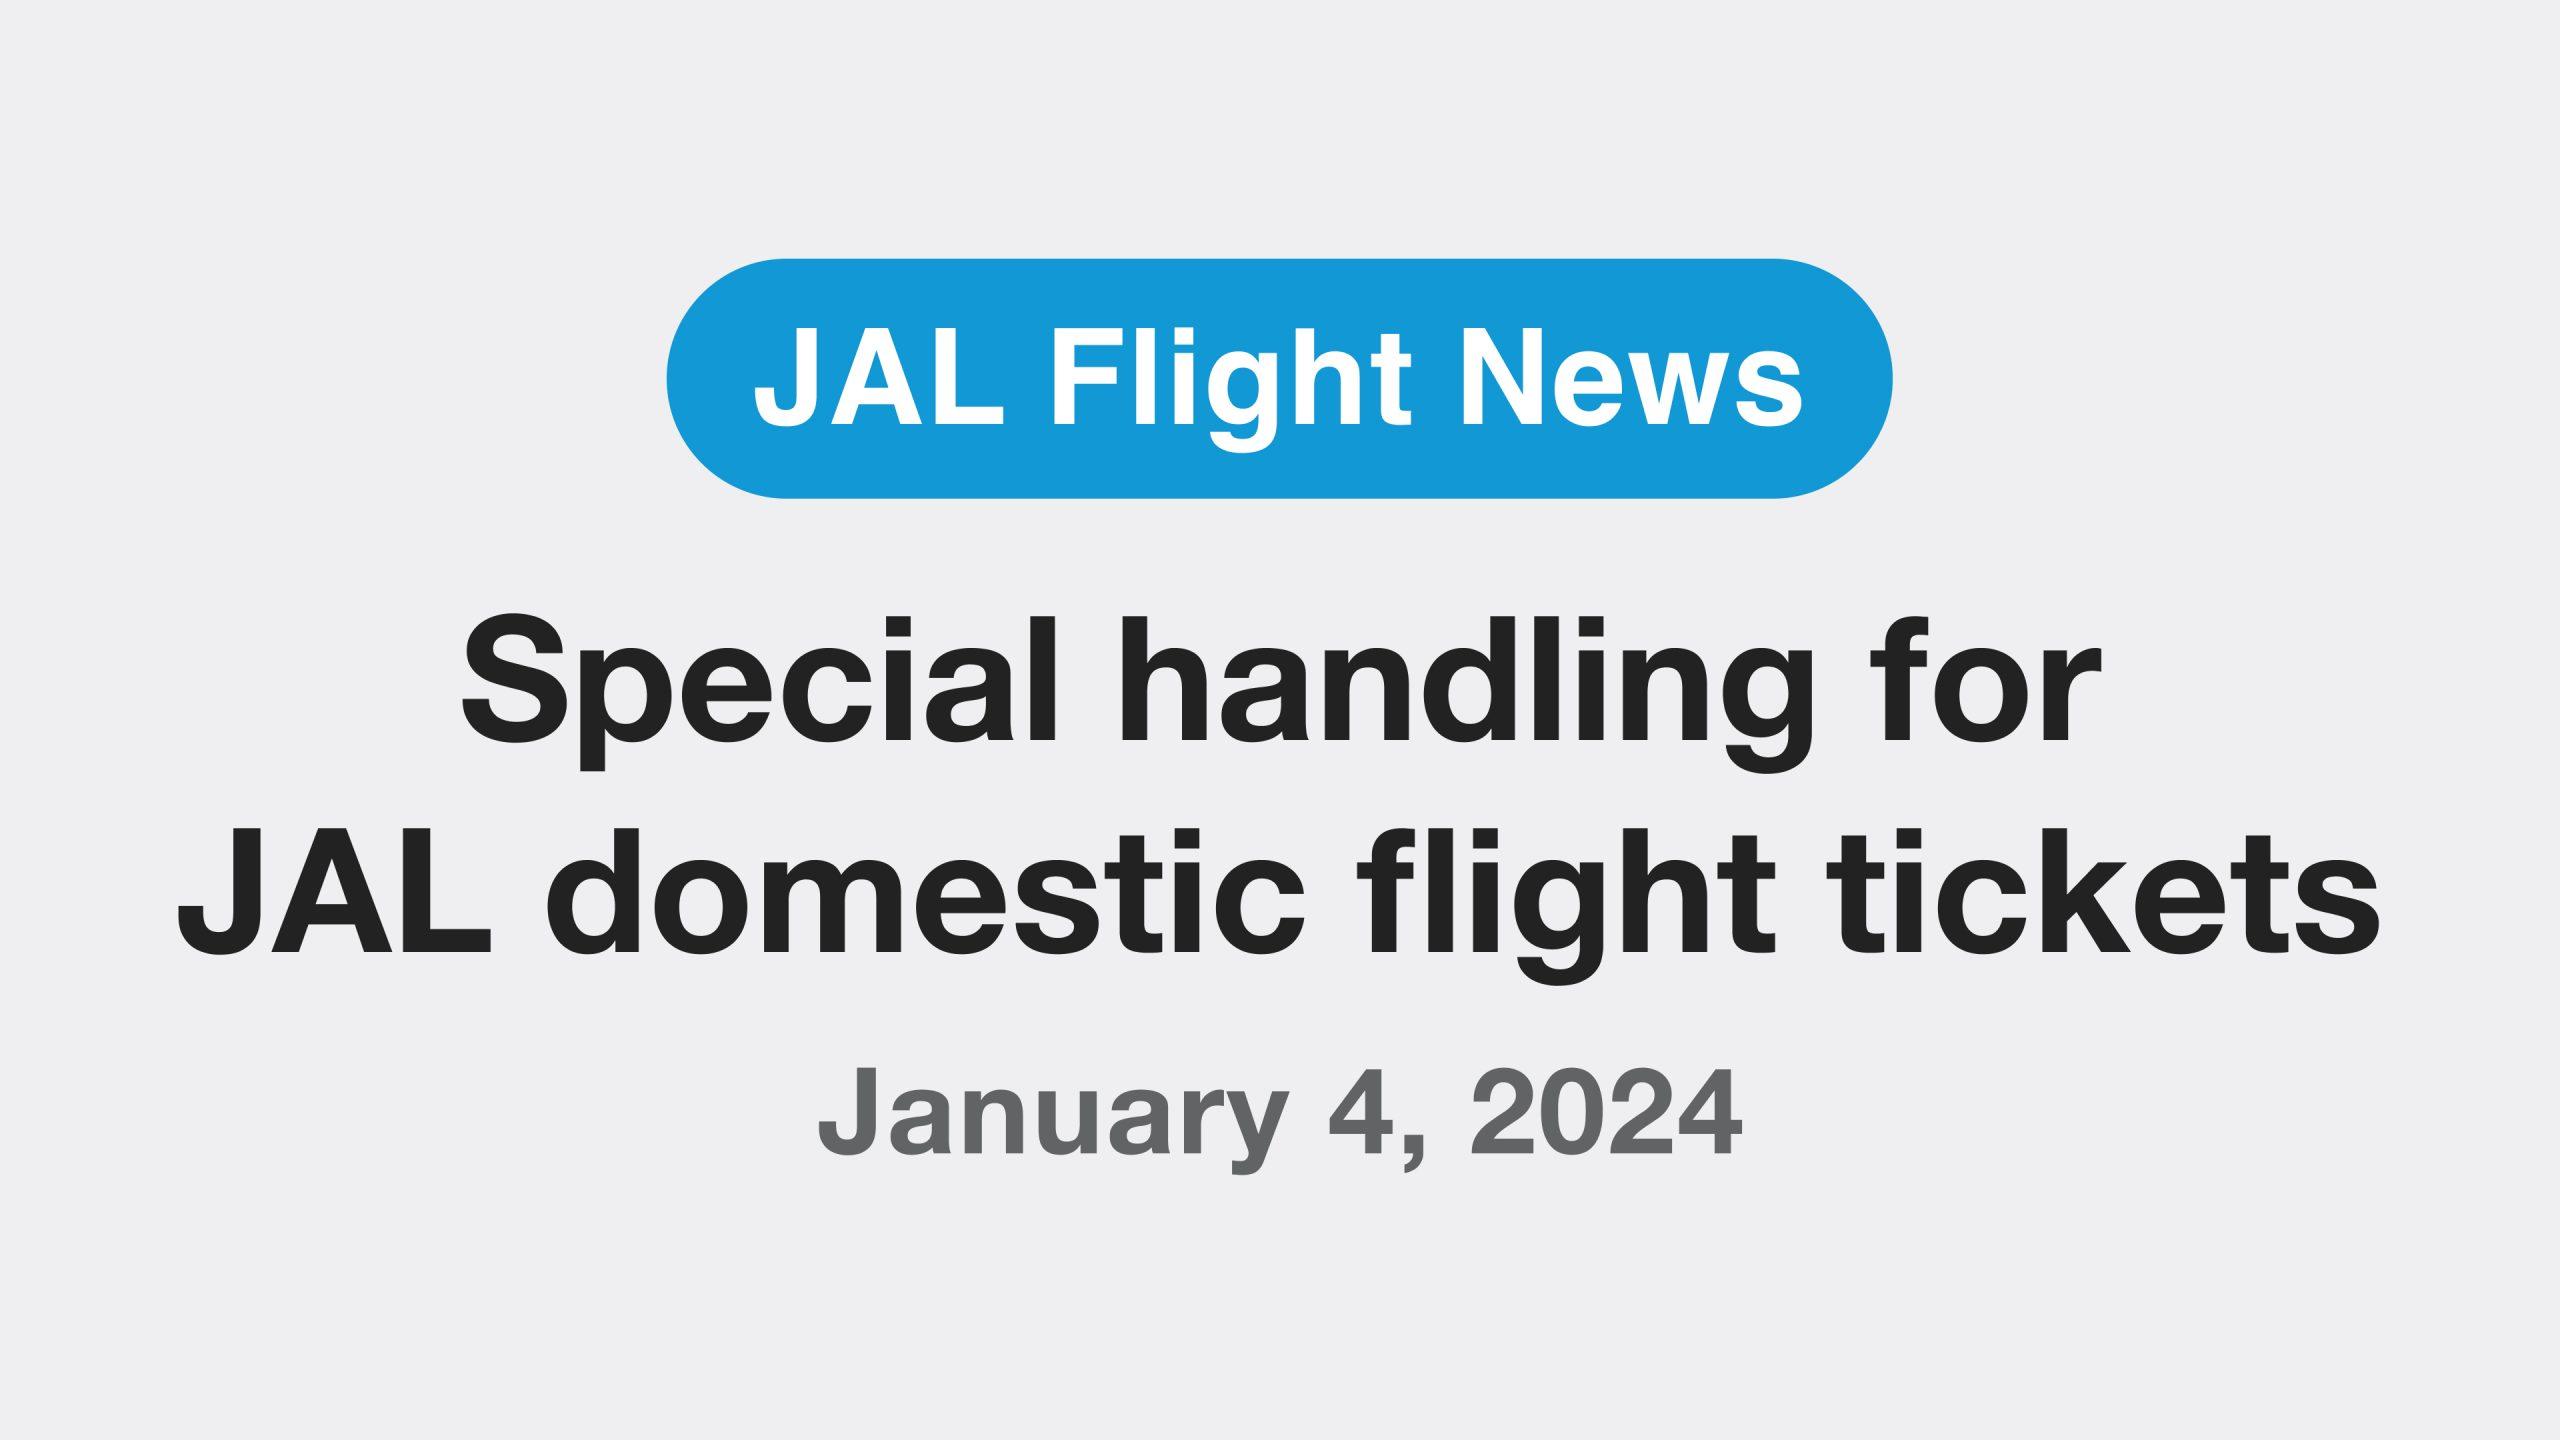 Special handling for JAL domestic flight tickets